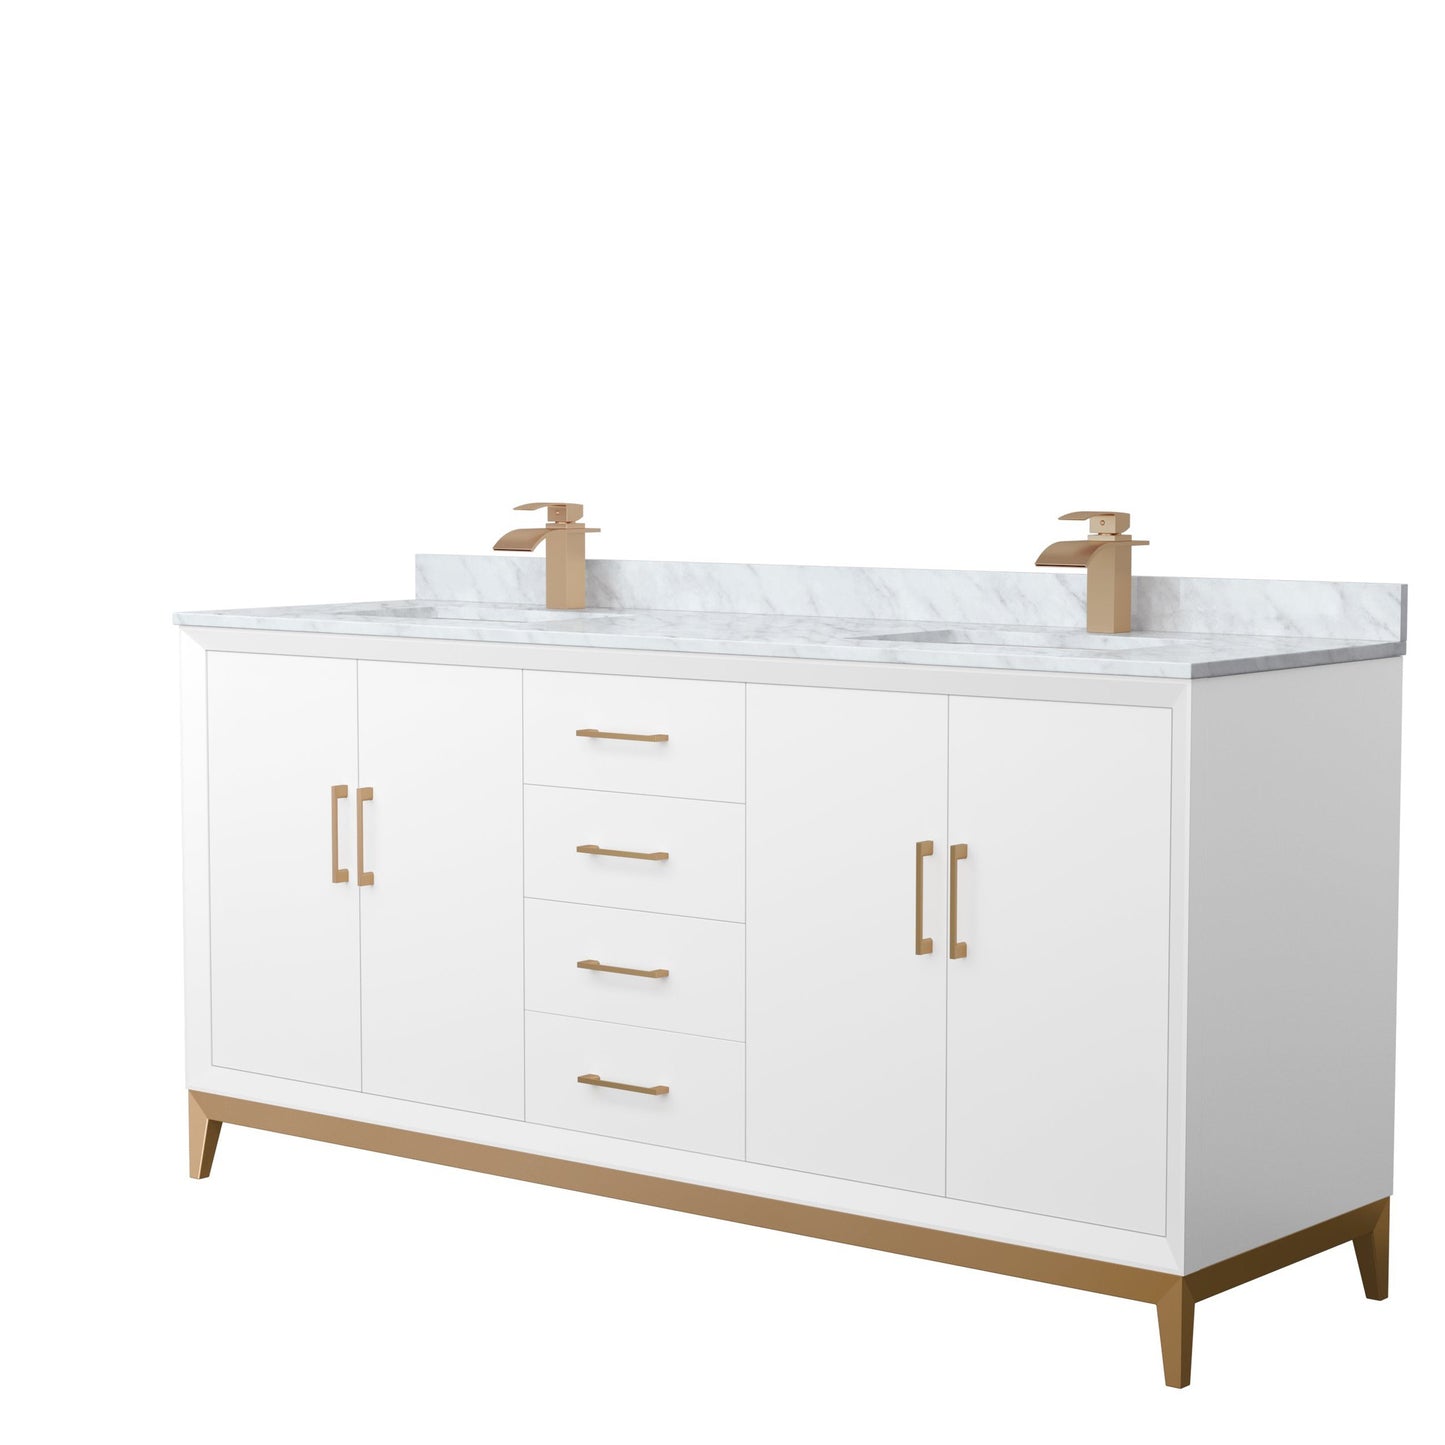 Wyndham Collection Amici 72" Double Bathroom Vanity in White, White Carrara Marble Countertop, Undermount Square Sinks, Satin Bronze Trim